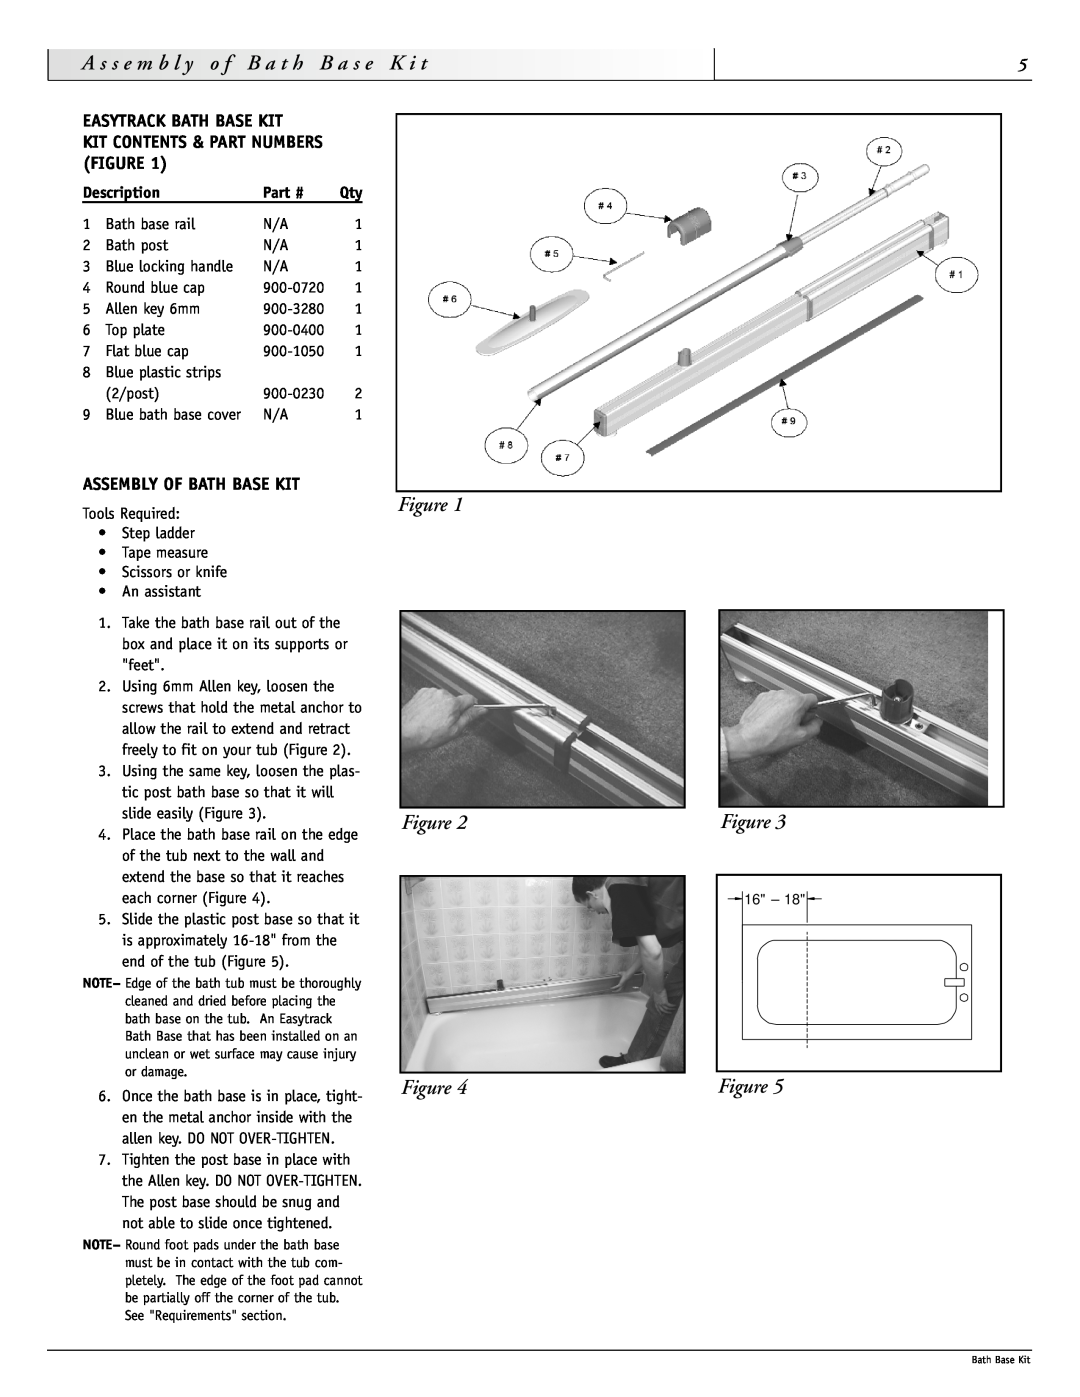 Sunrise Medical 900-0880 instruction manual b l y, a s e, Figure Figure Figure 